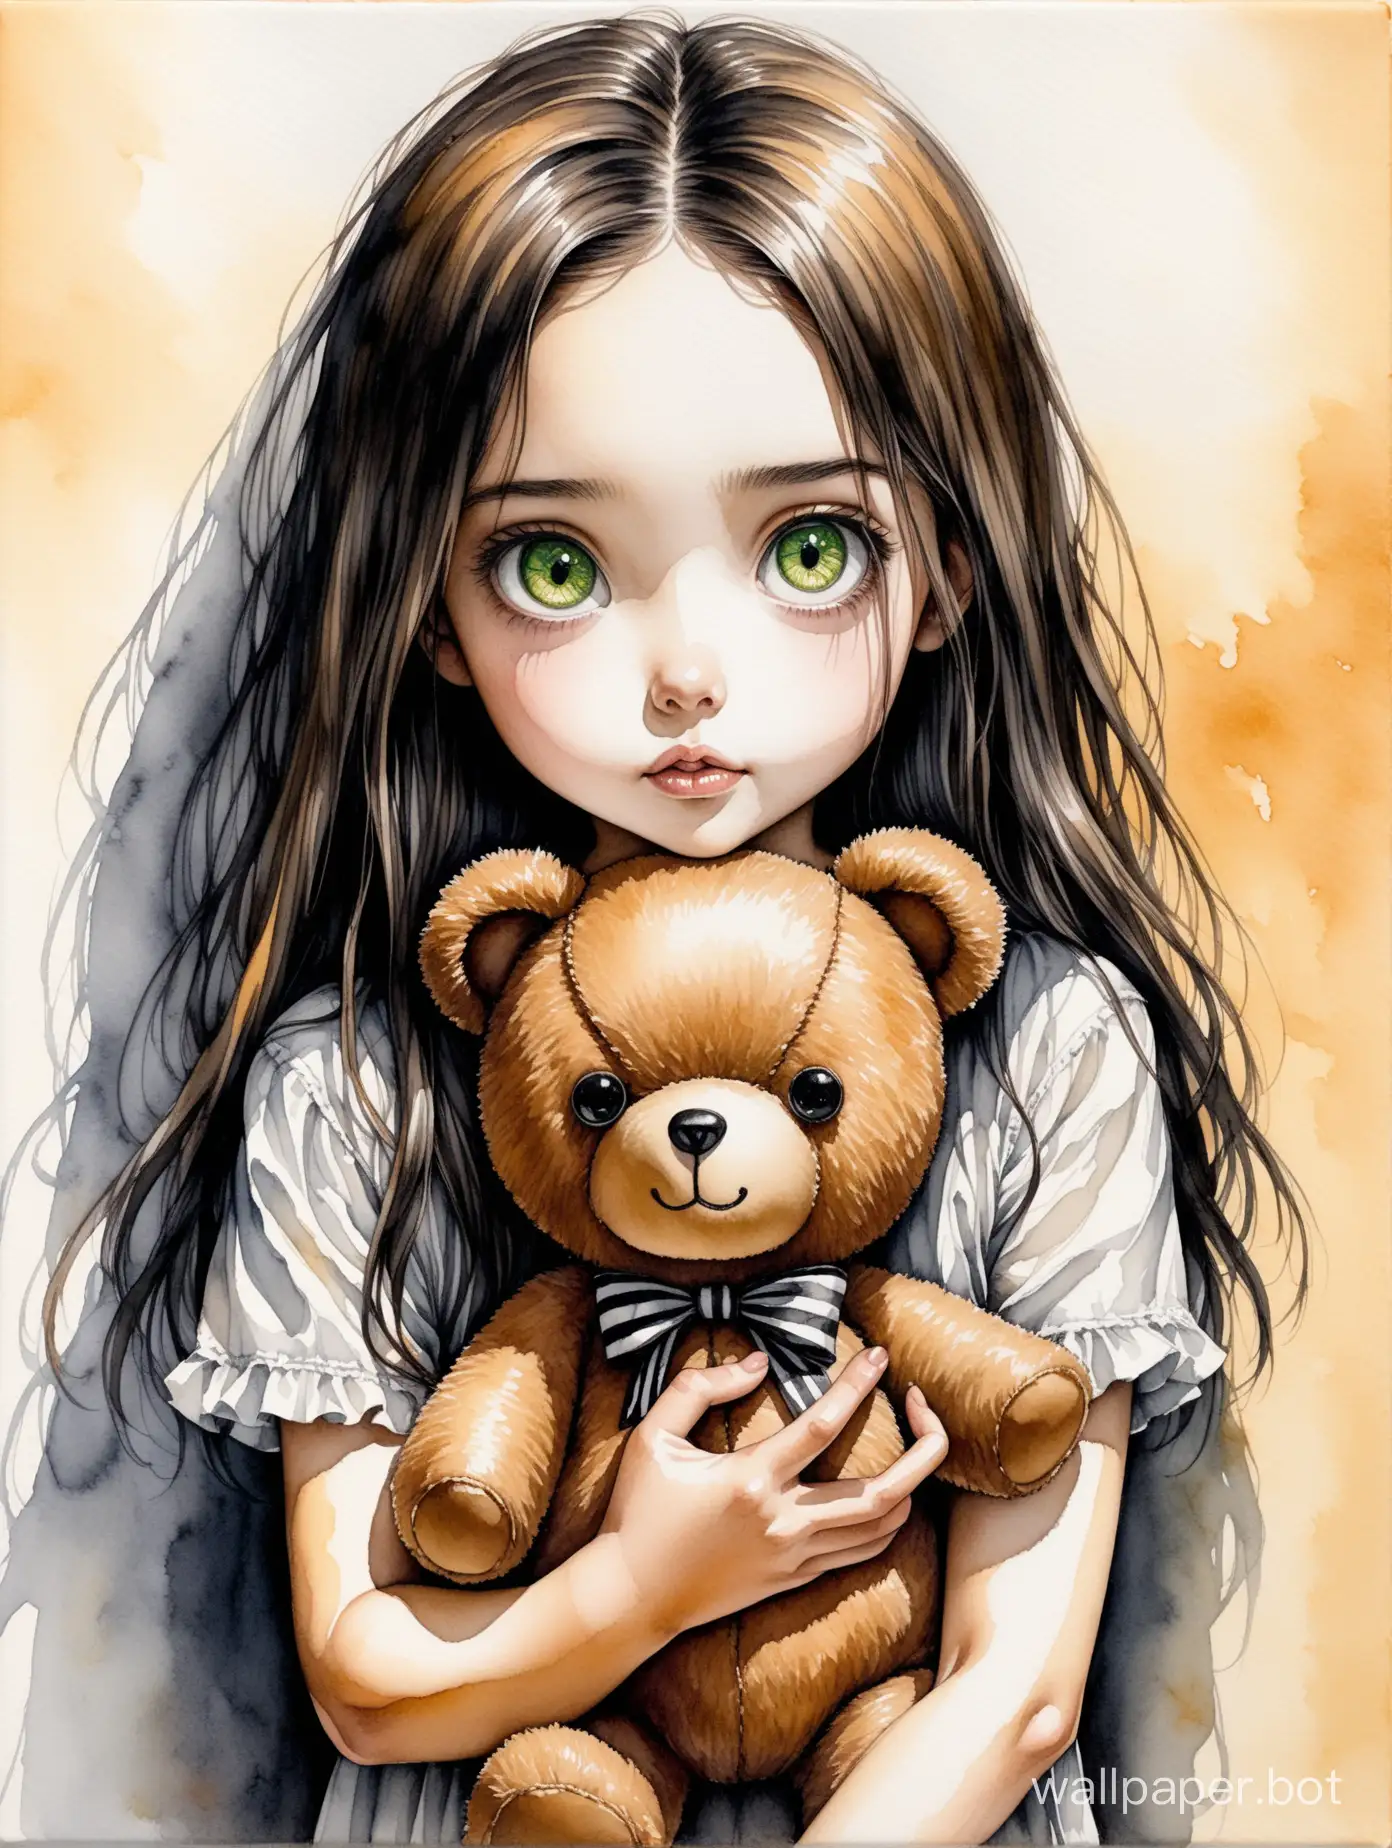 Adorable-14YearOld-Girl-with-Teddy-Bear-Hyperrealism-Portrait-in-Tim-Burton-Style